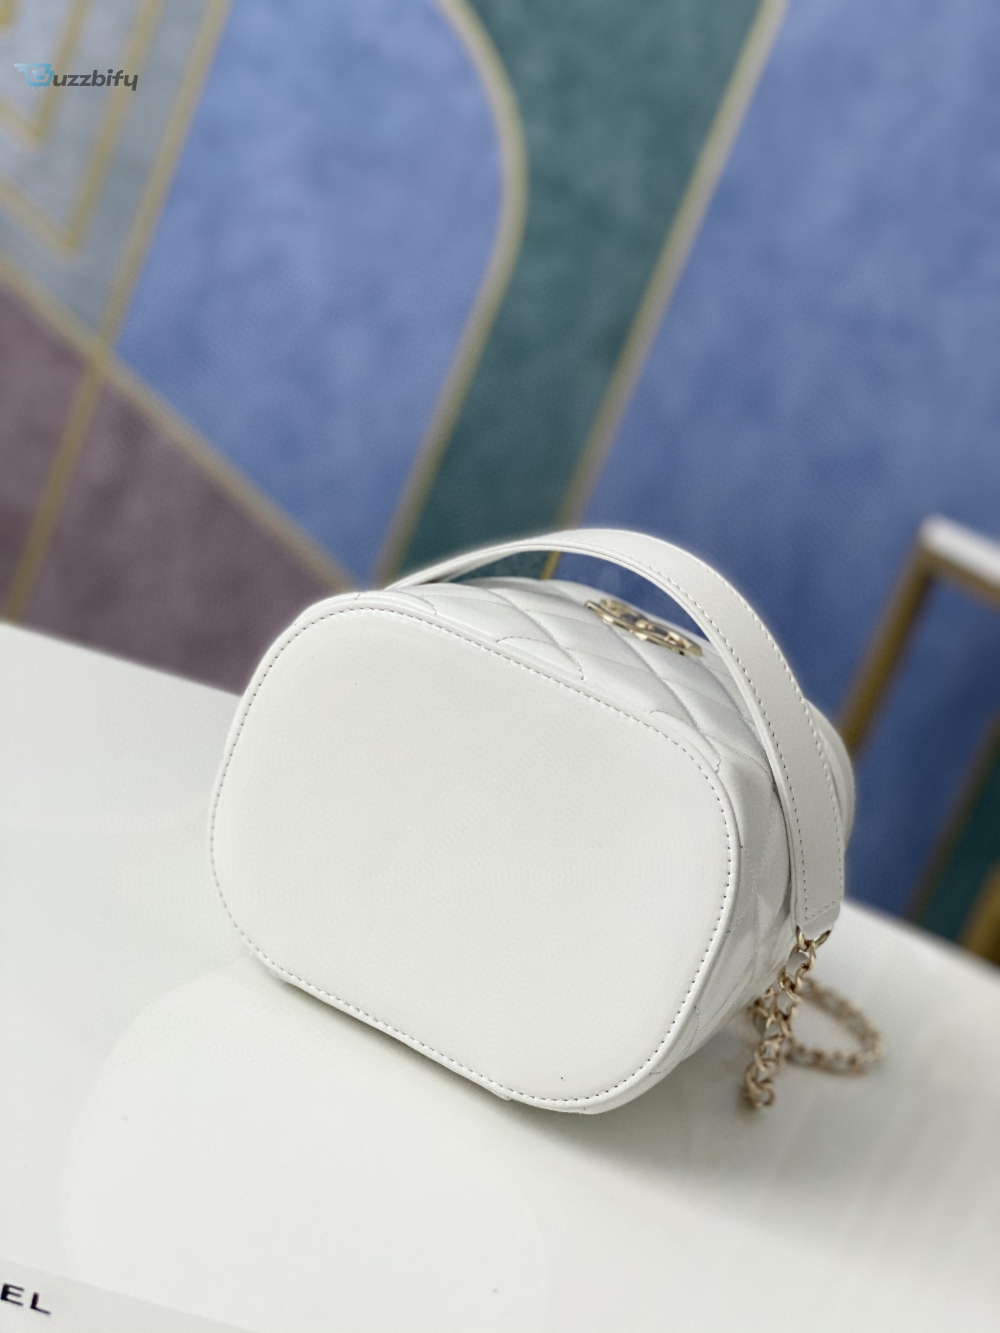 Chanel Vanity Case Gold Hardware White For Women, Women’s Handbags, Shoulder Bags 9.4in/24cm 